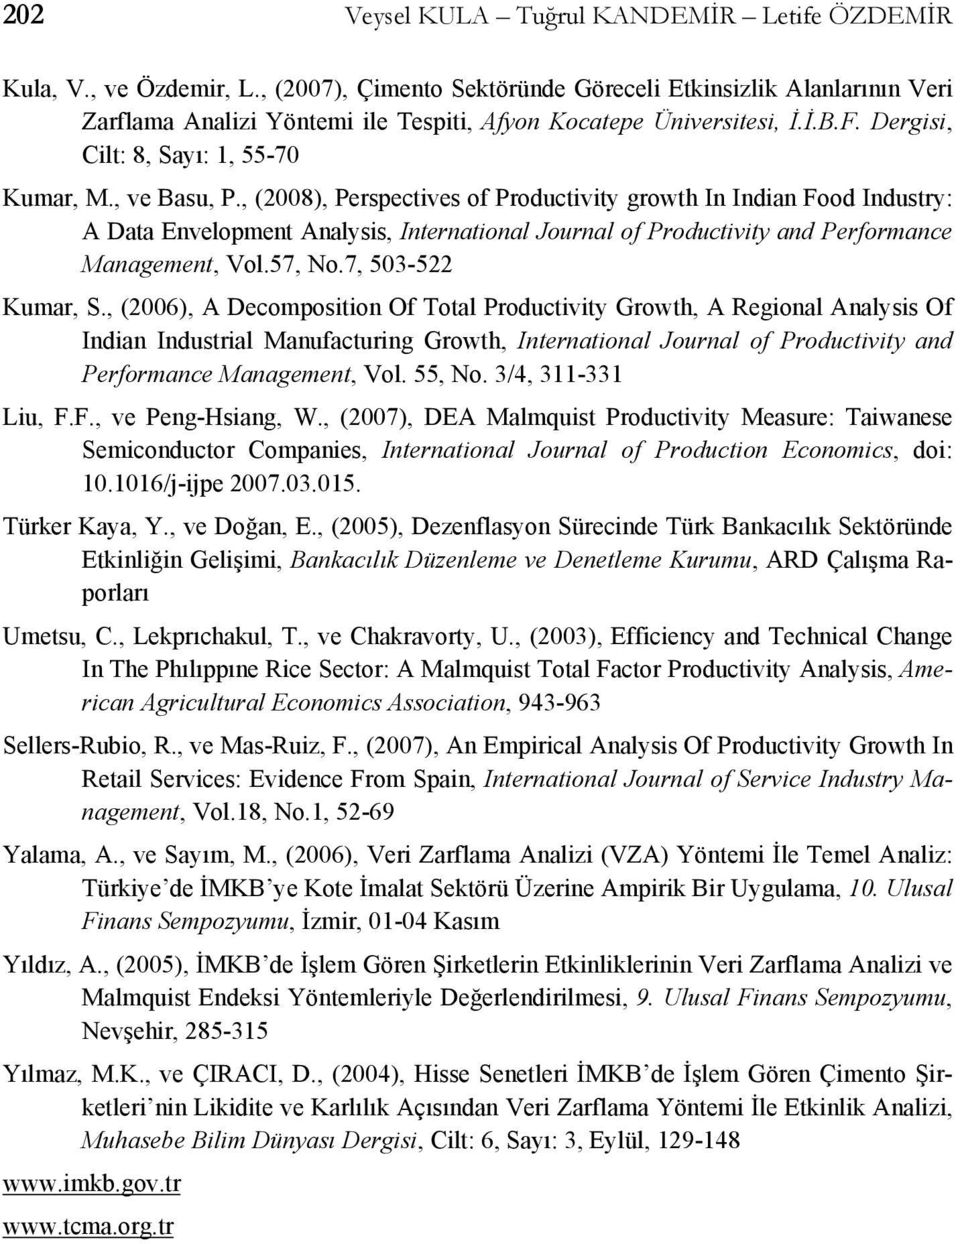 7 503-522 Kumar S. 2006 A ecmpsiin Of Tal Prducivi Grwh A Reginal Analsis Of Indian Indusrial Manufacuring Grwh Inernainal Jurnal f Prducivi and Perfrmance Managemen Vl. 55 N. 3/4 3-33 Liu F.